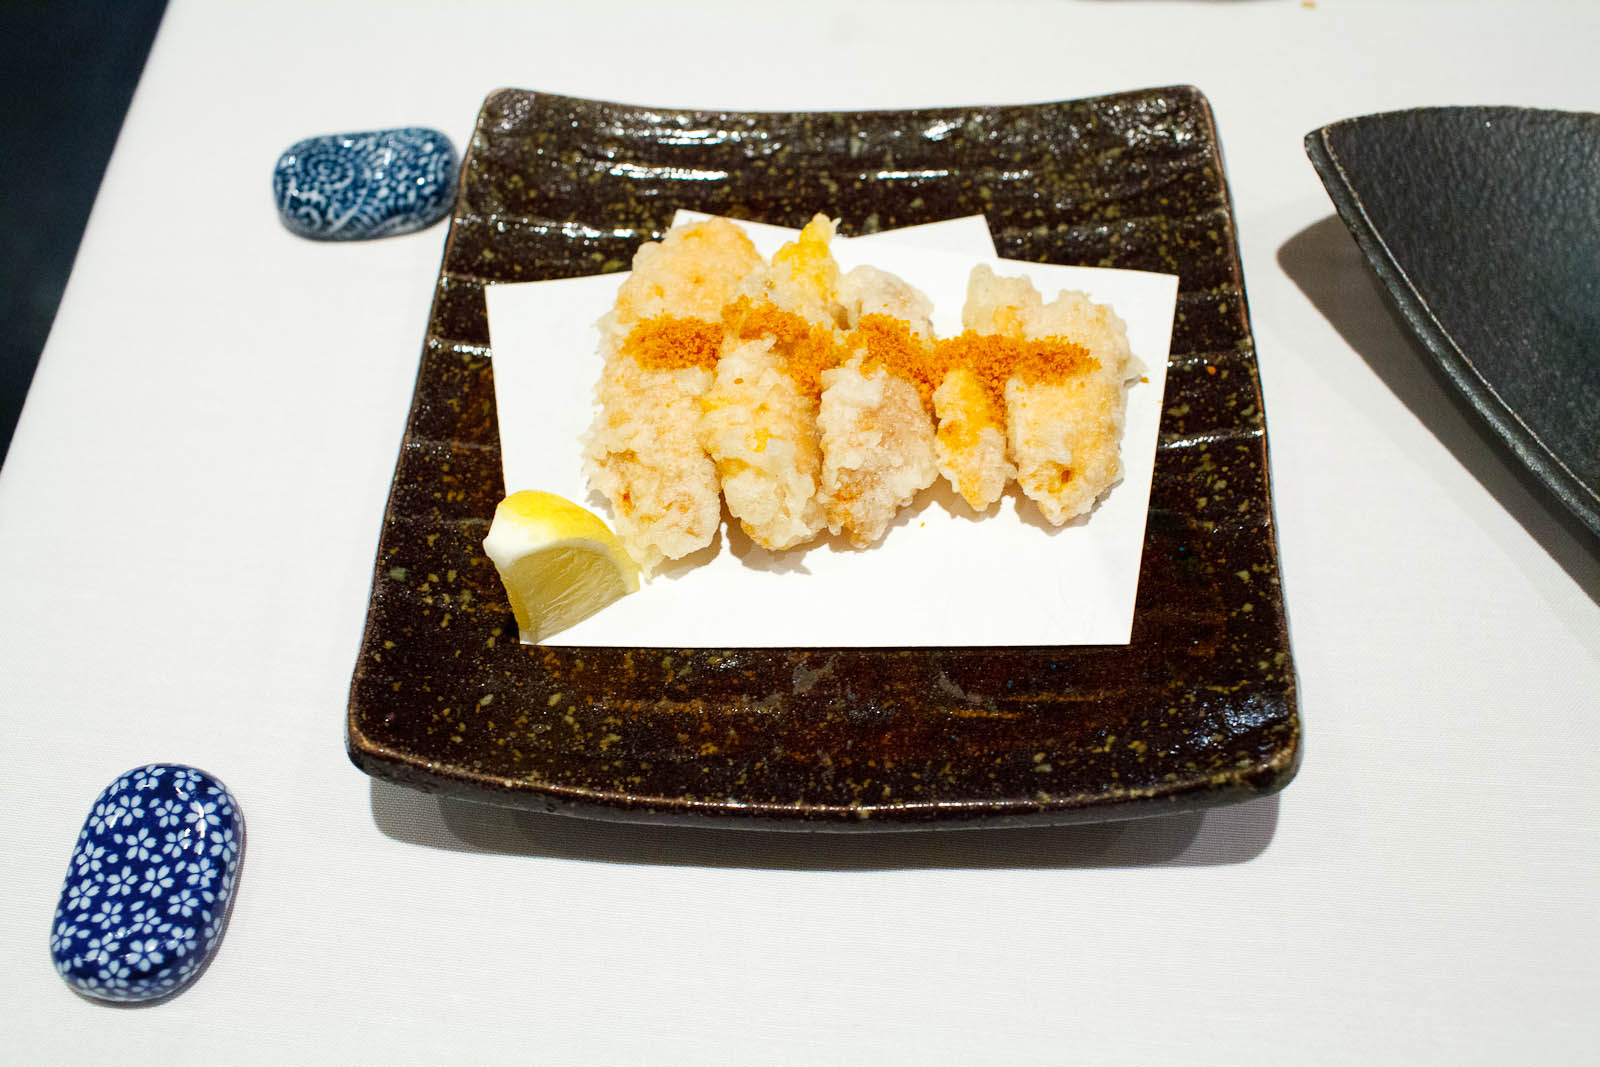 Uni tempura with uni powder - deep fried sashimi quality sea urc